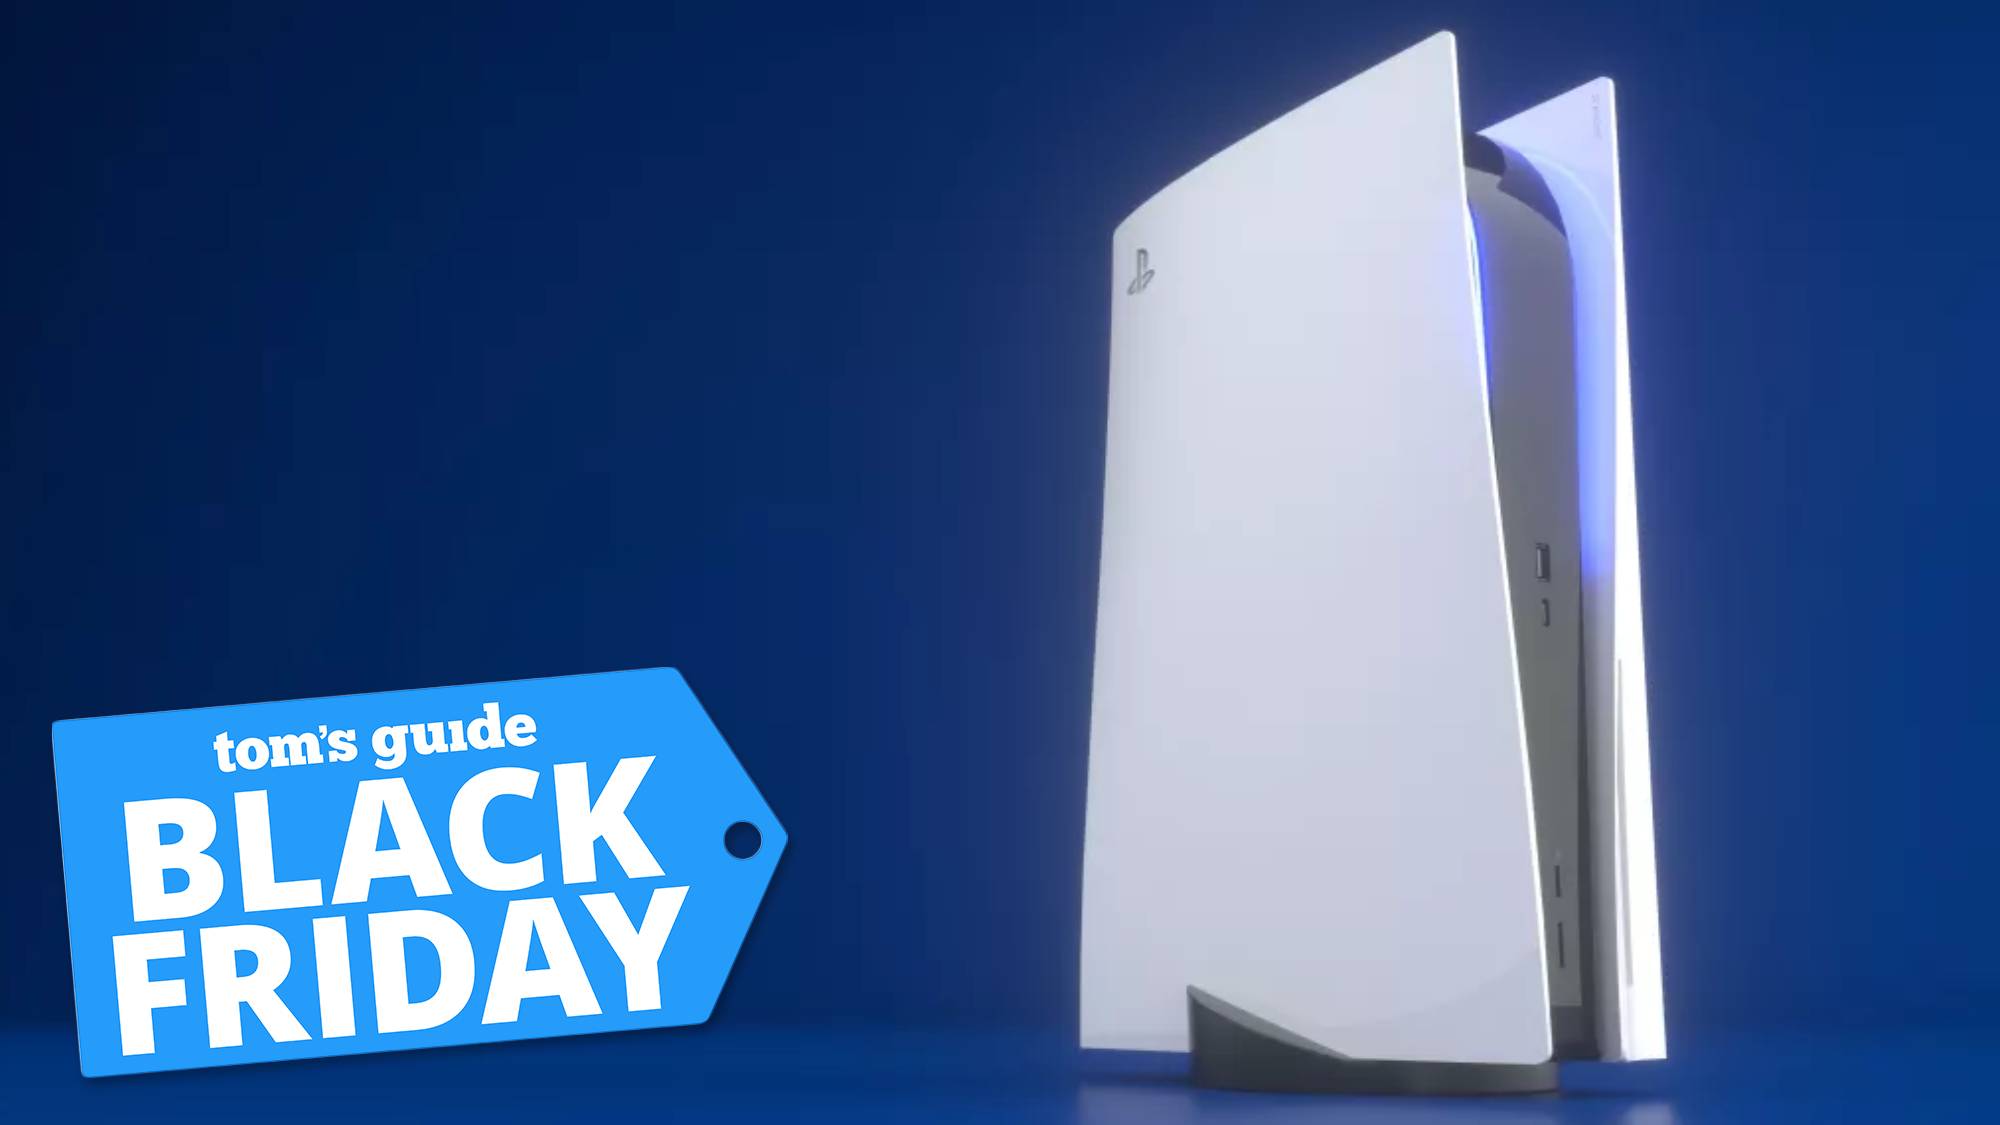 PlayStation 5 Black Friday deals go live today!